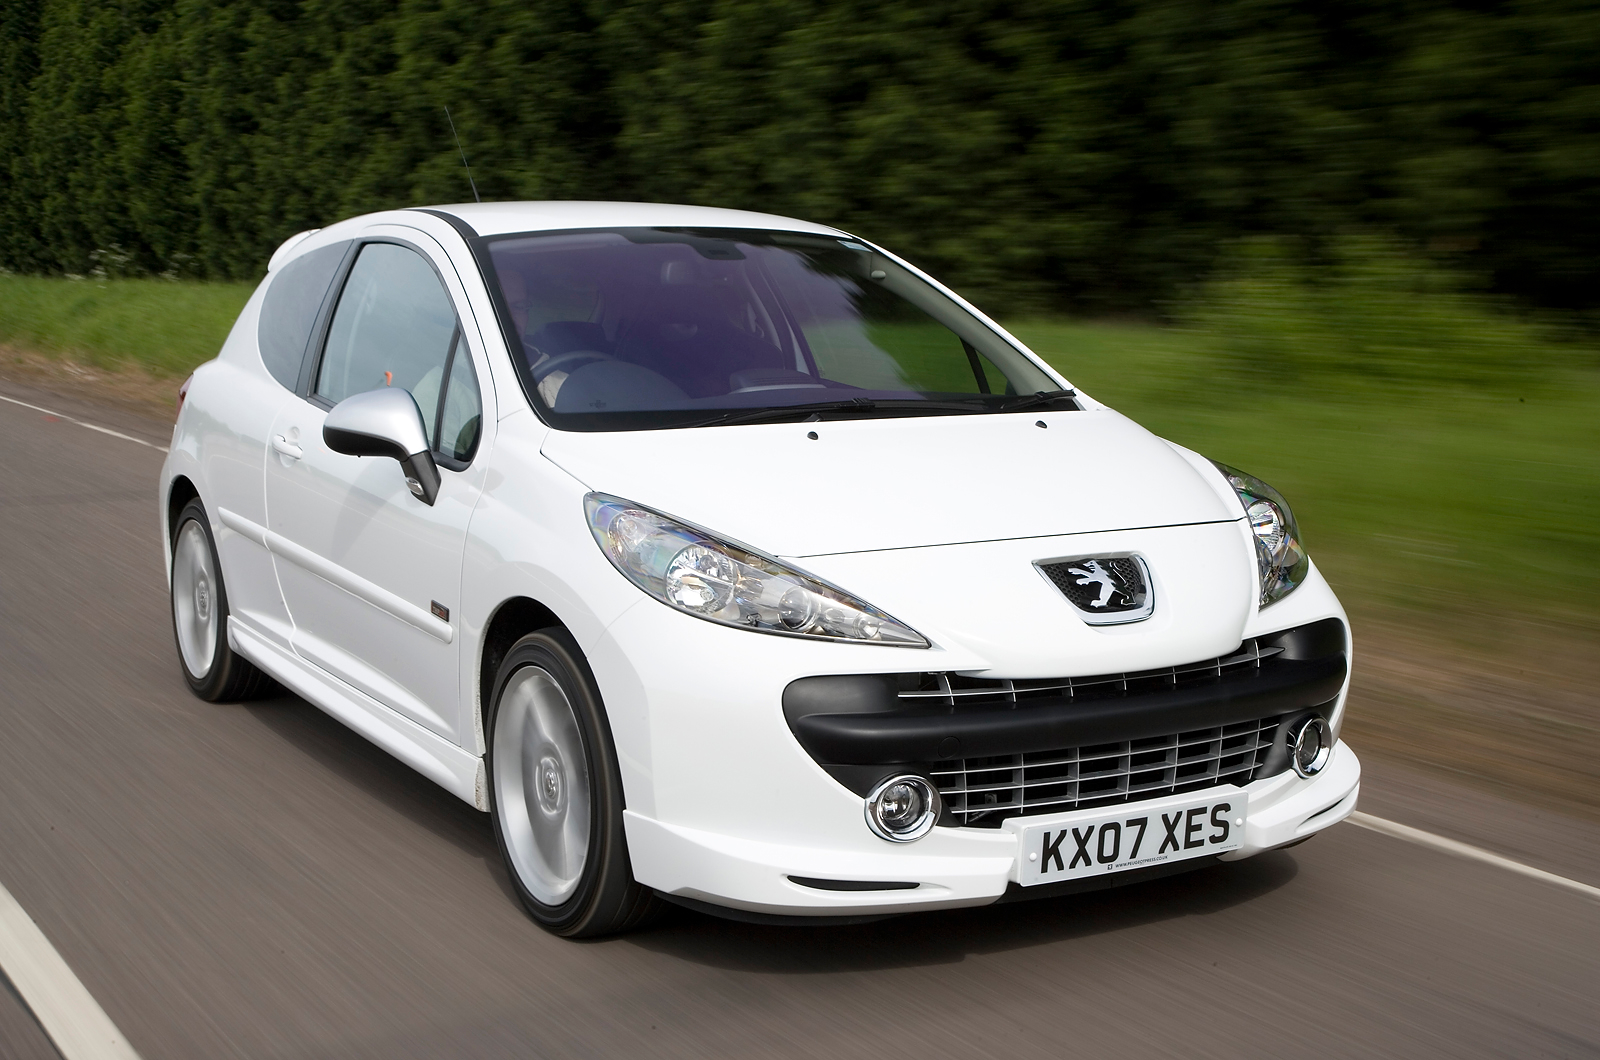 Peugeot 207 (2006 - 2009) used car review, Car review